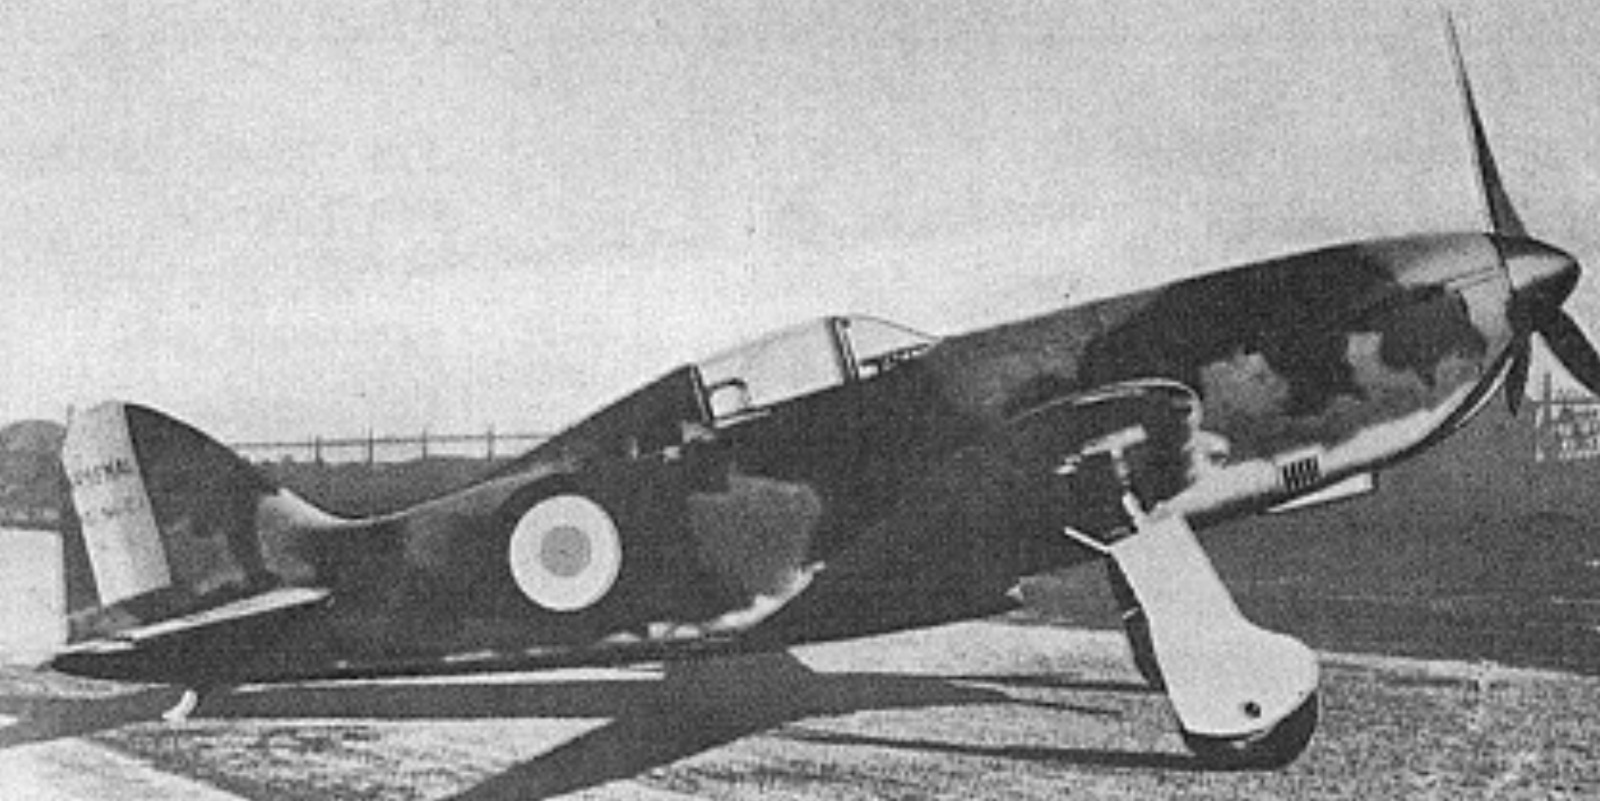 Arsenal VG-35 Wood Desk Model Big New WW2 Monoplane Fighter/Fighter Bomber